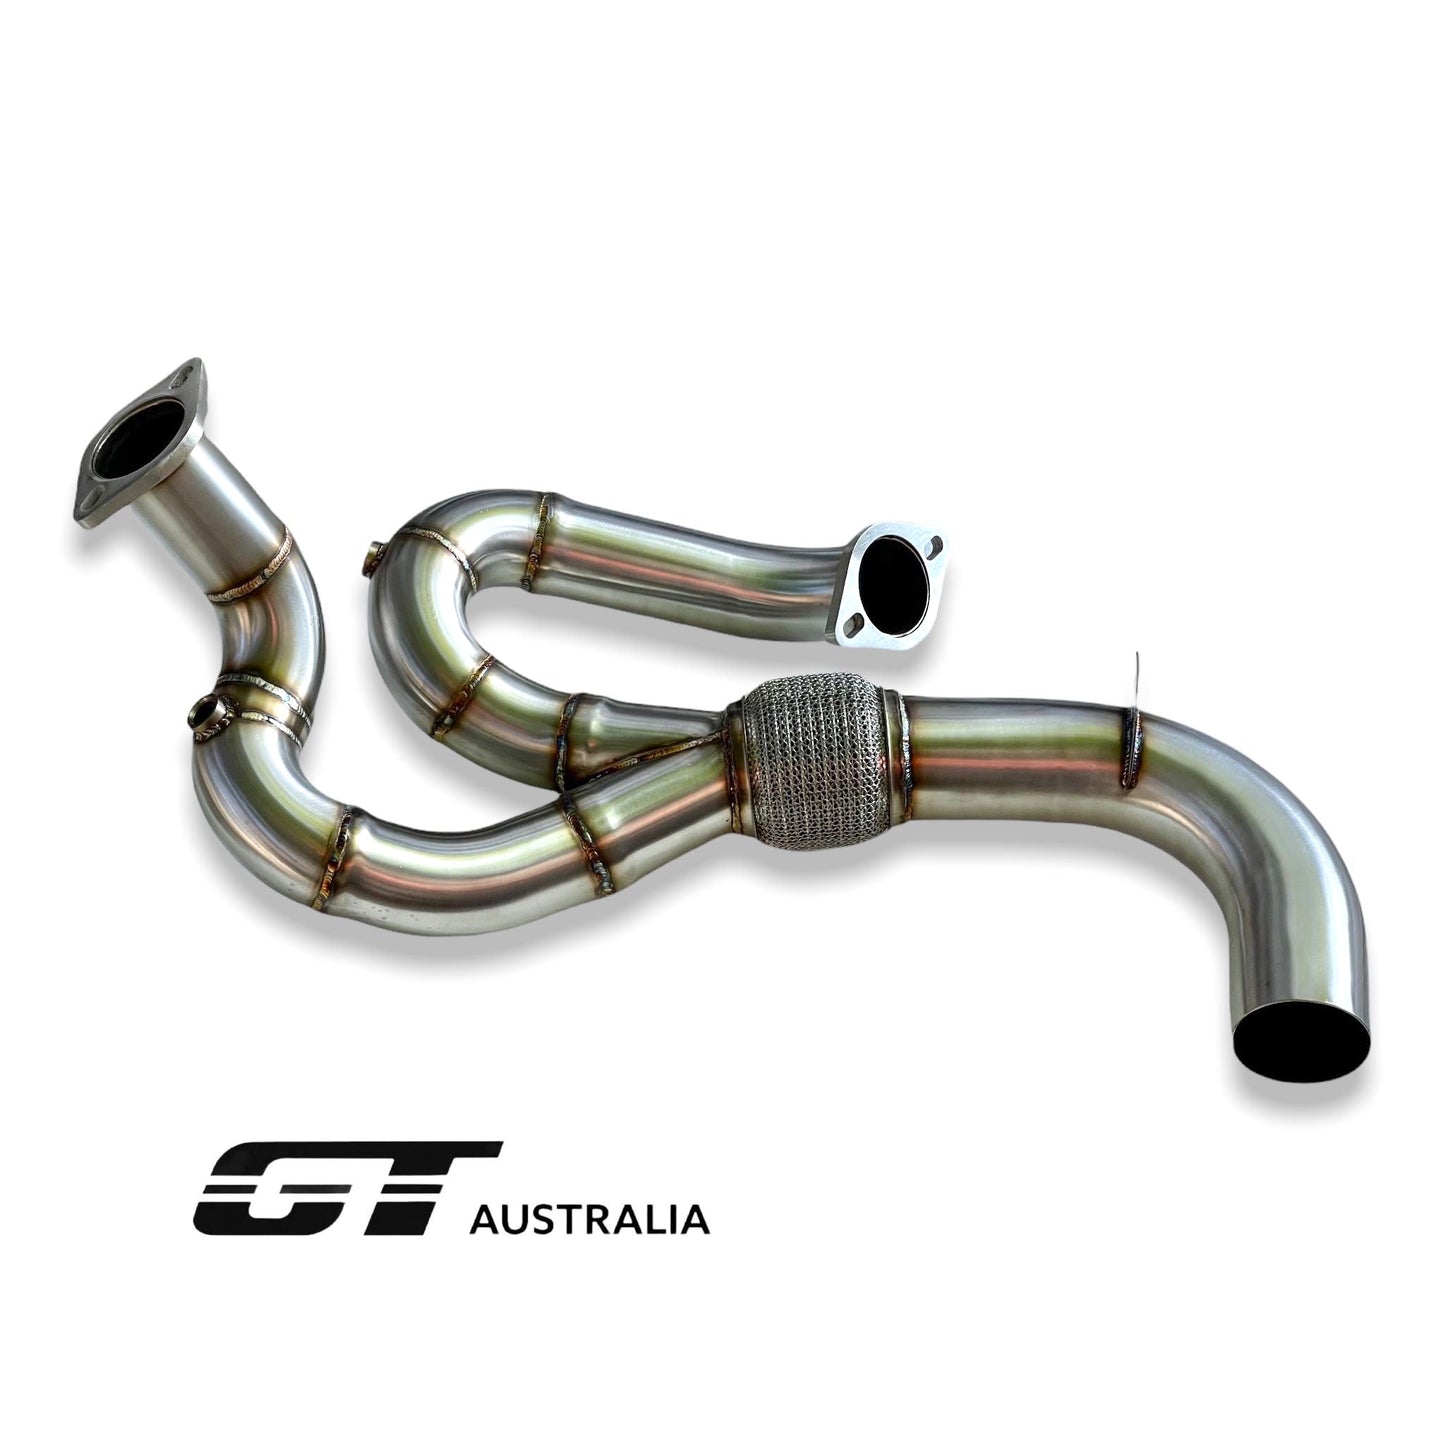 Lotus Evora GT, 400 Stainless Steel 304 Y-pip by GT Australia